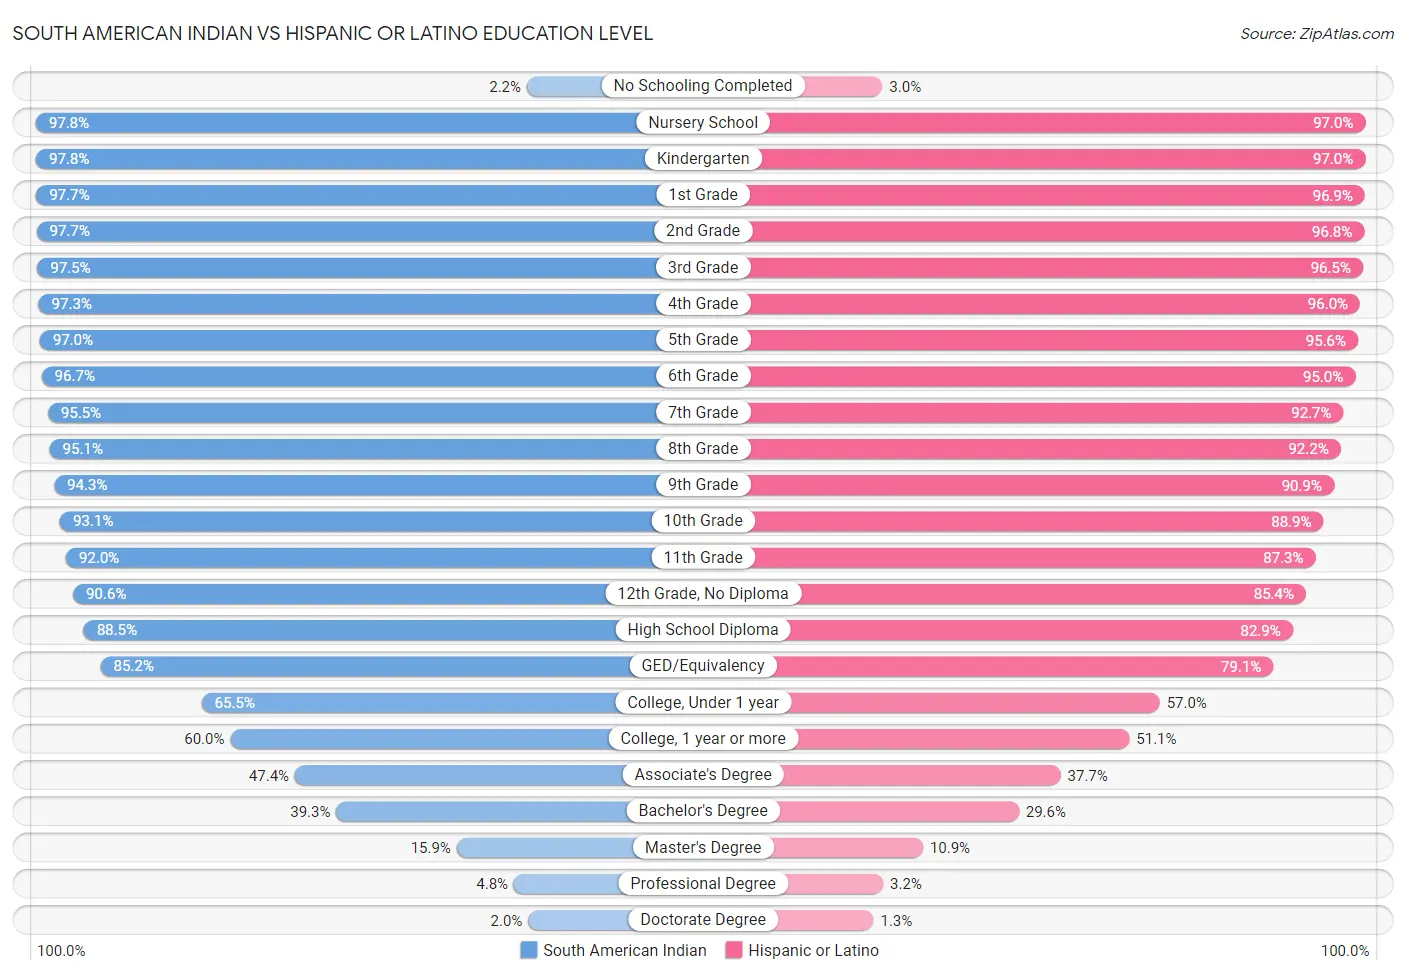 South American Indian vs Hispanic or Latino Education Level